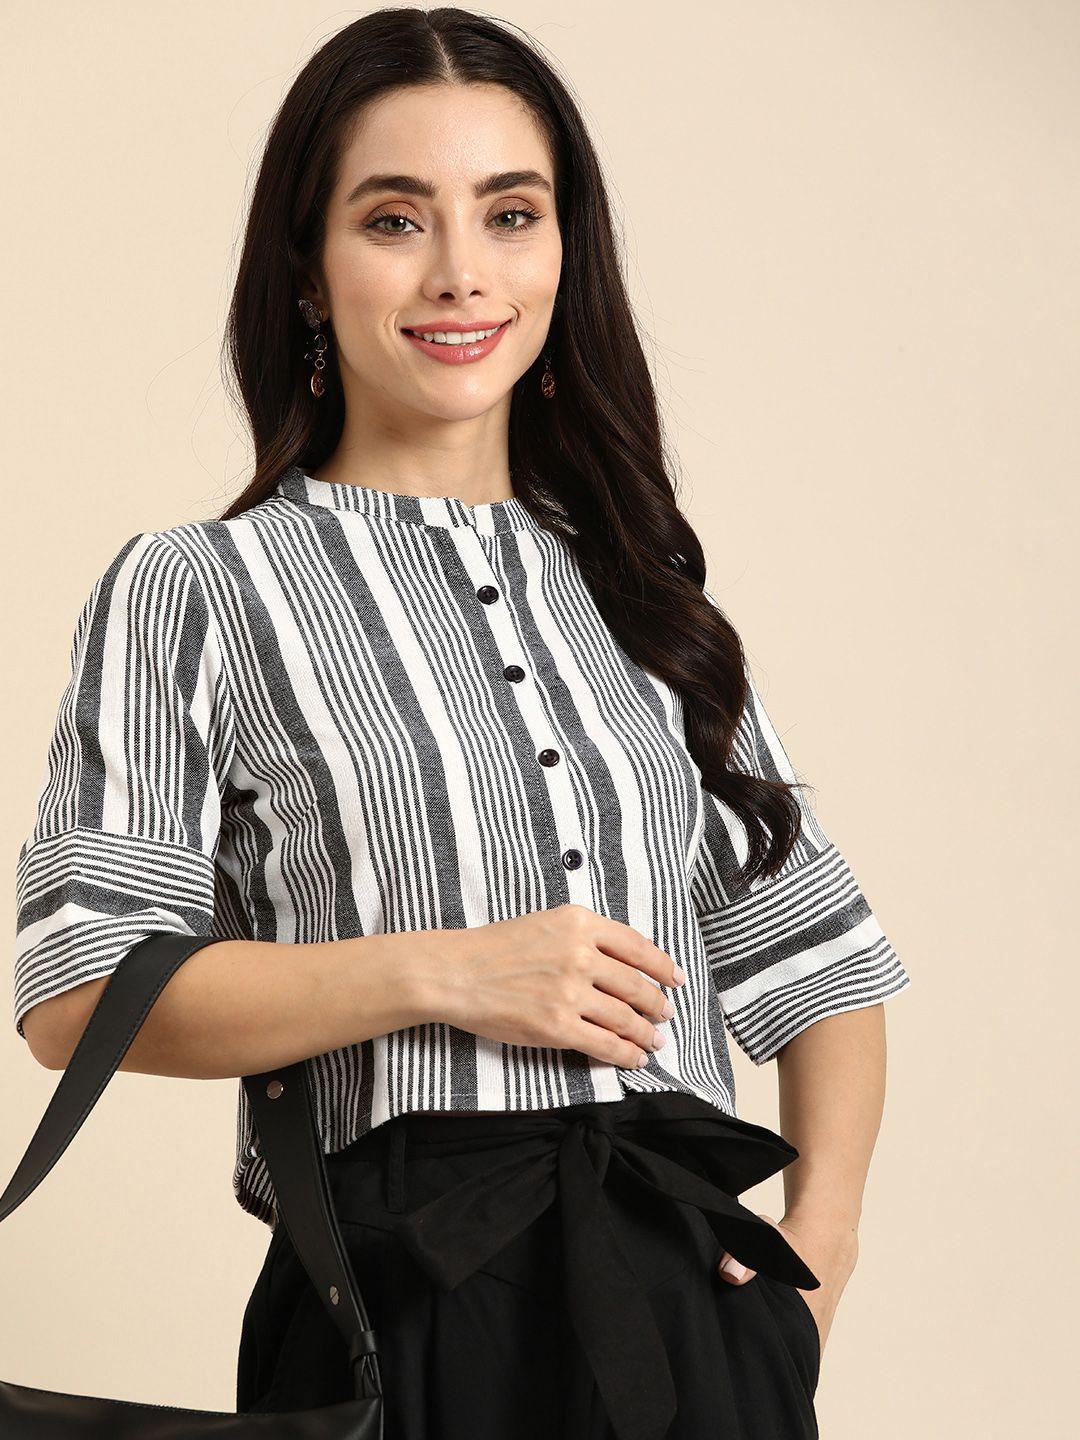 anouk vertically striped monochrome shirt style crop top